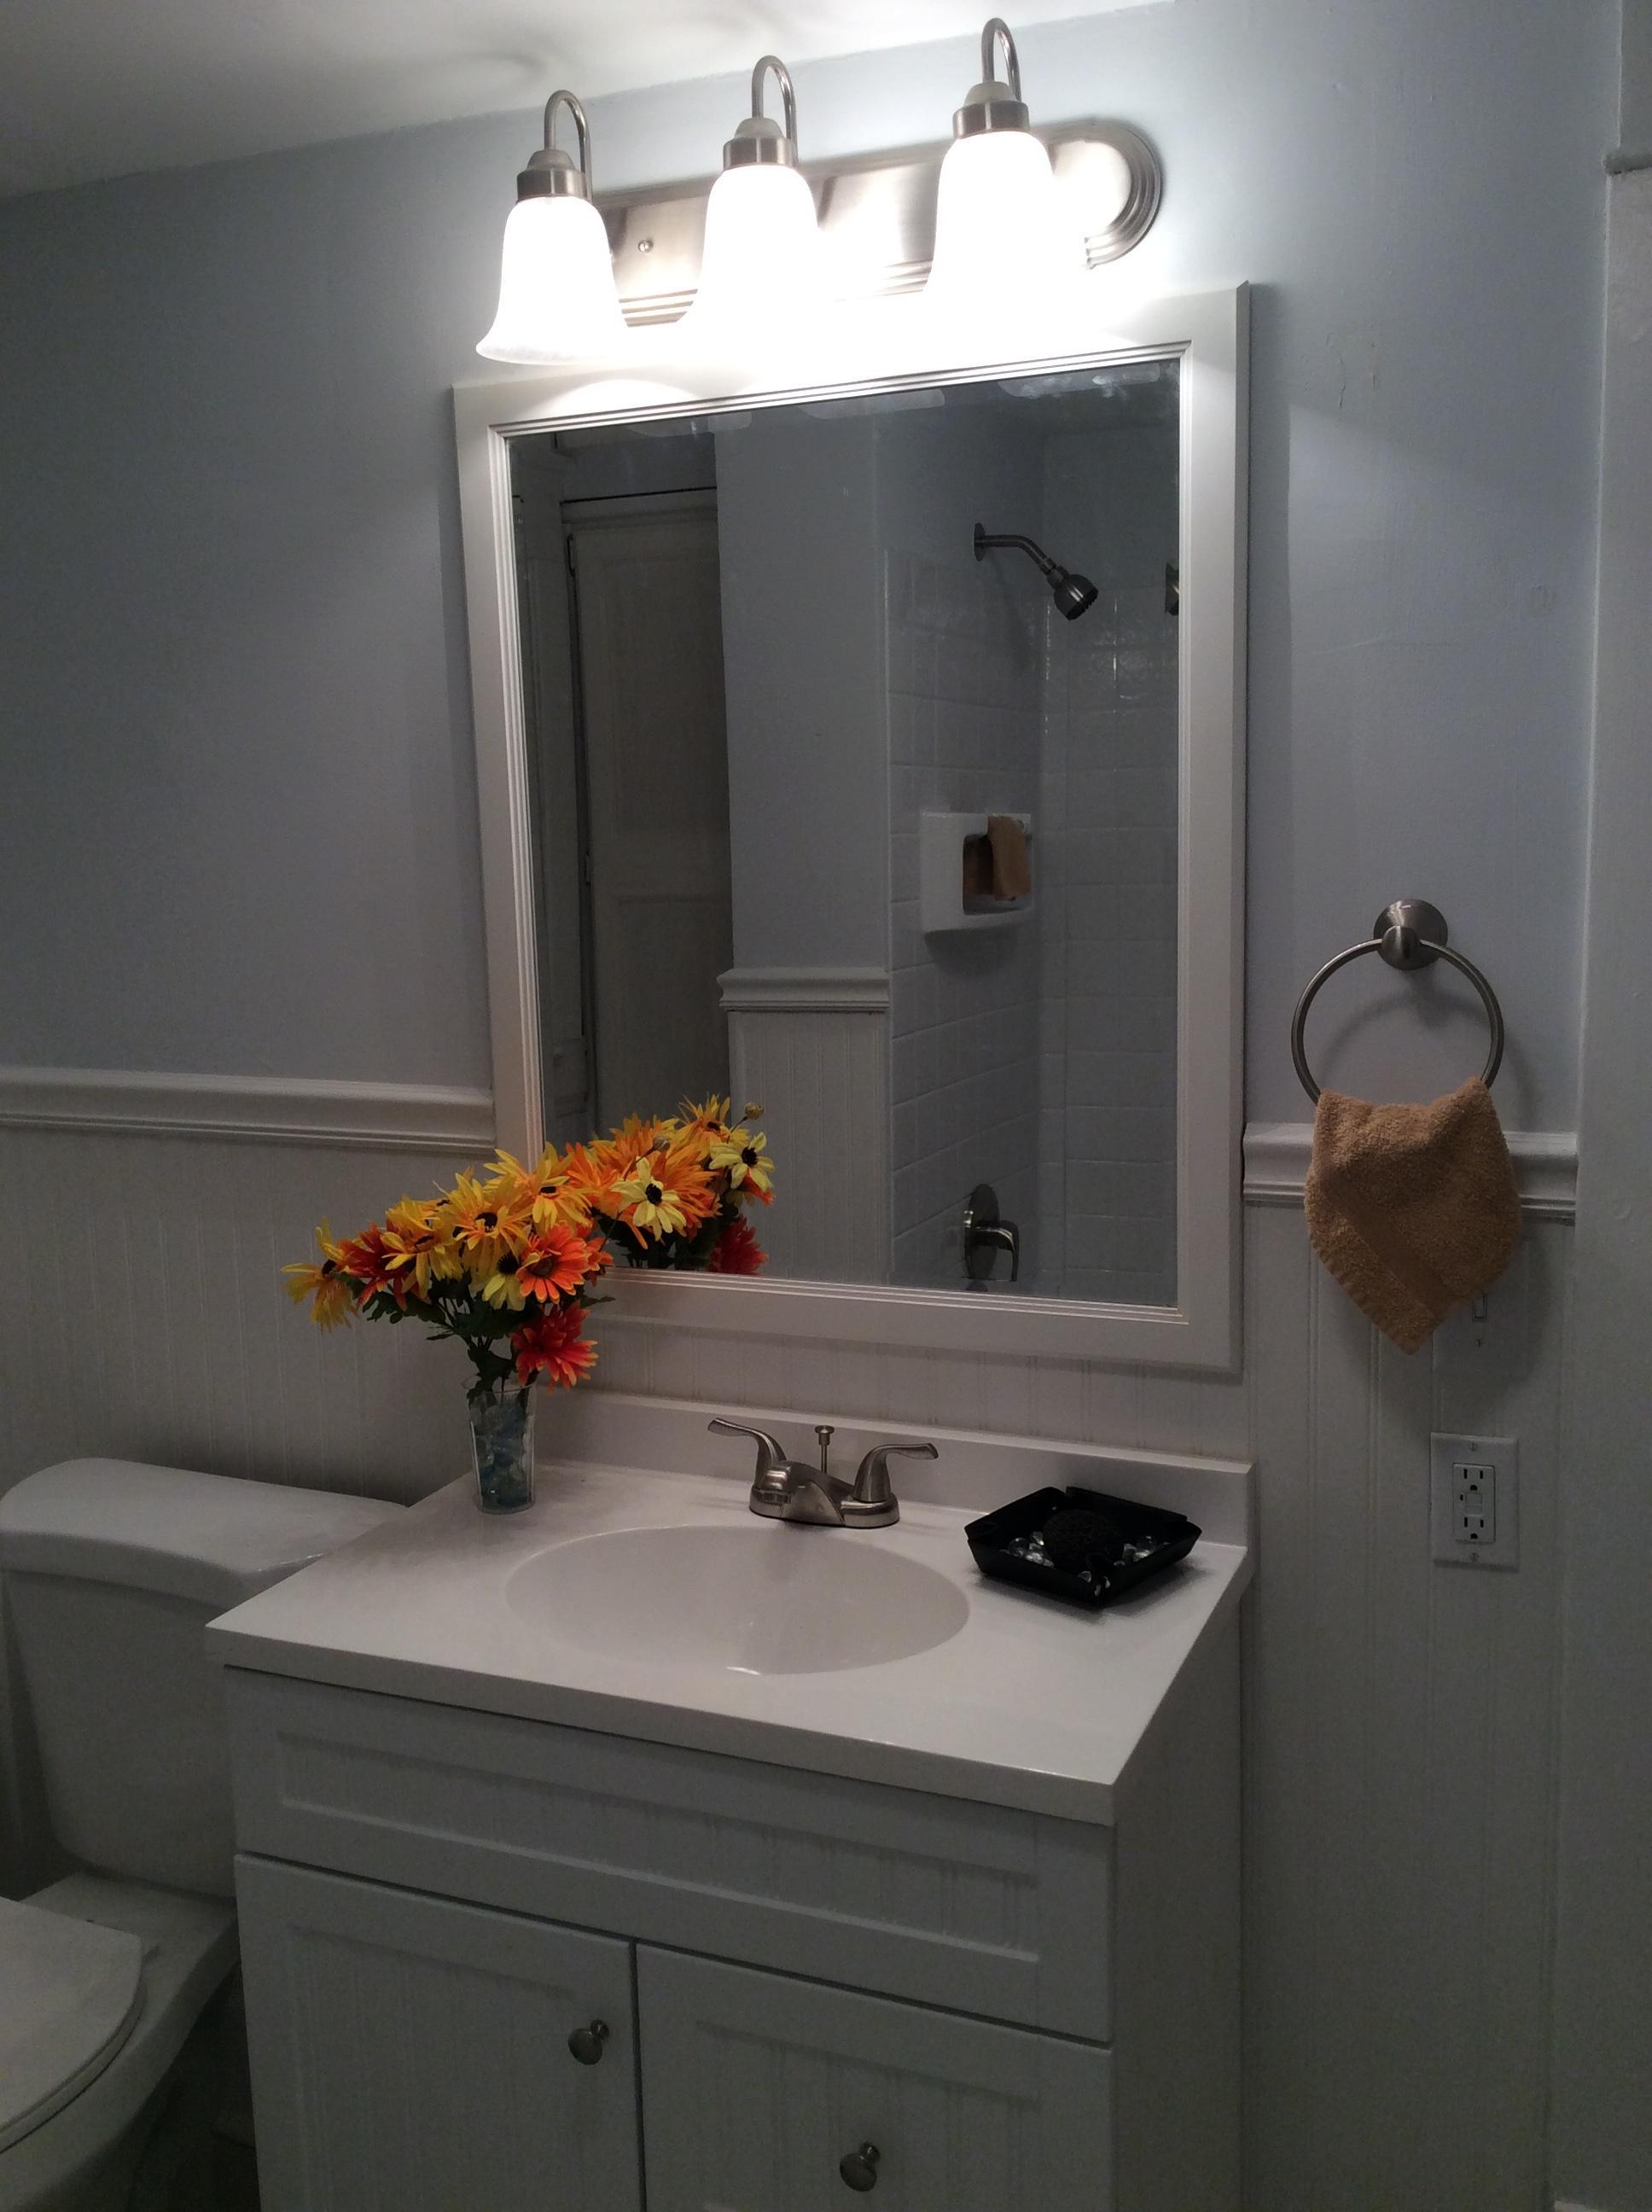 Dream bathroom with bead board walls, new tub surround, new floor, stylish vanity and brushed nickel hardware.